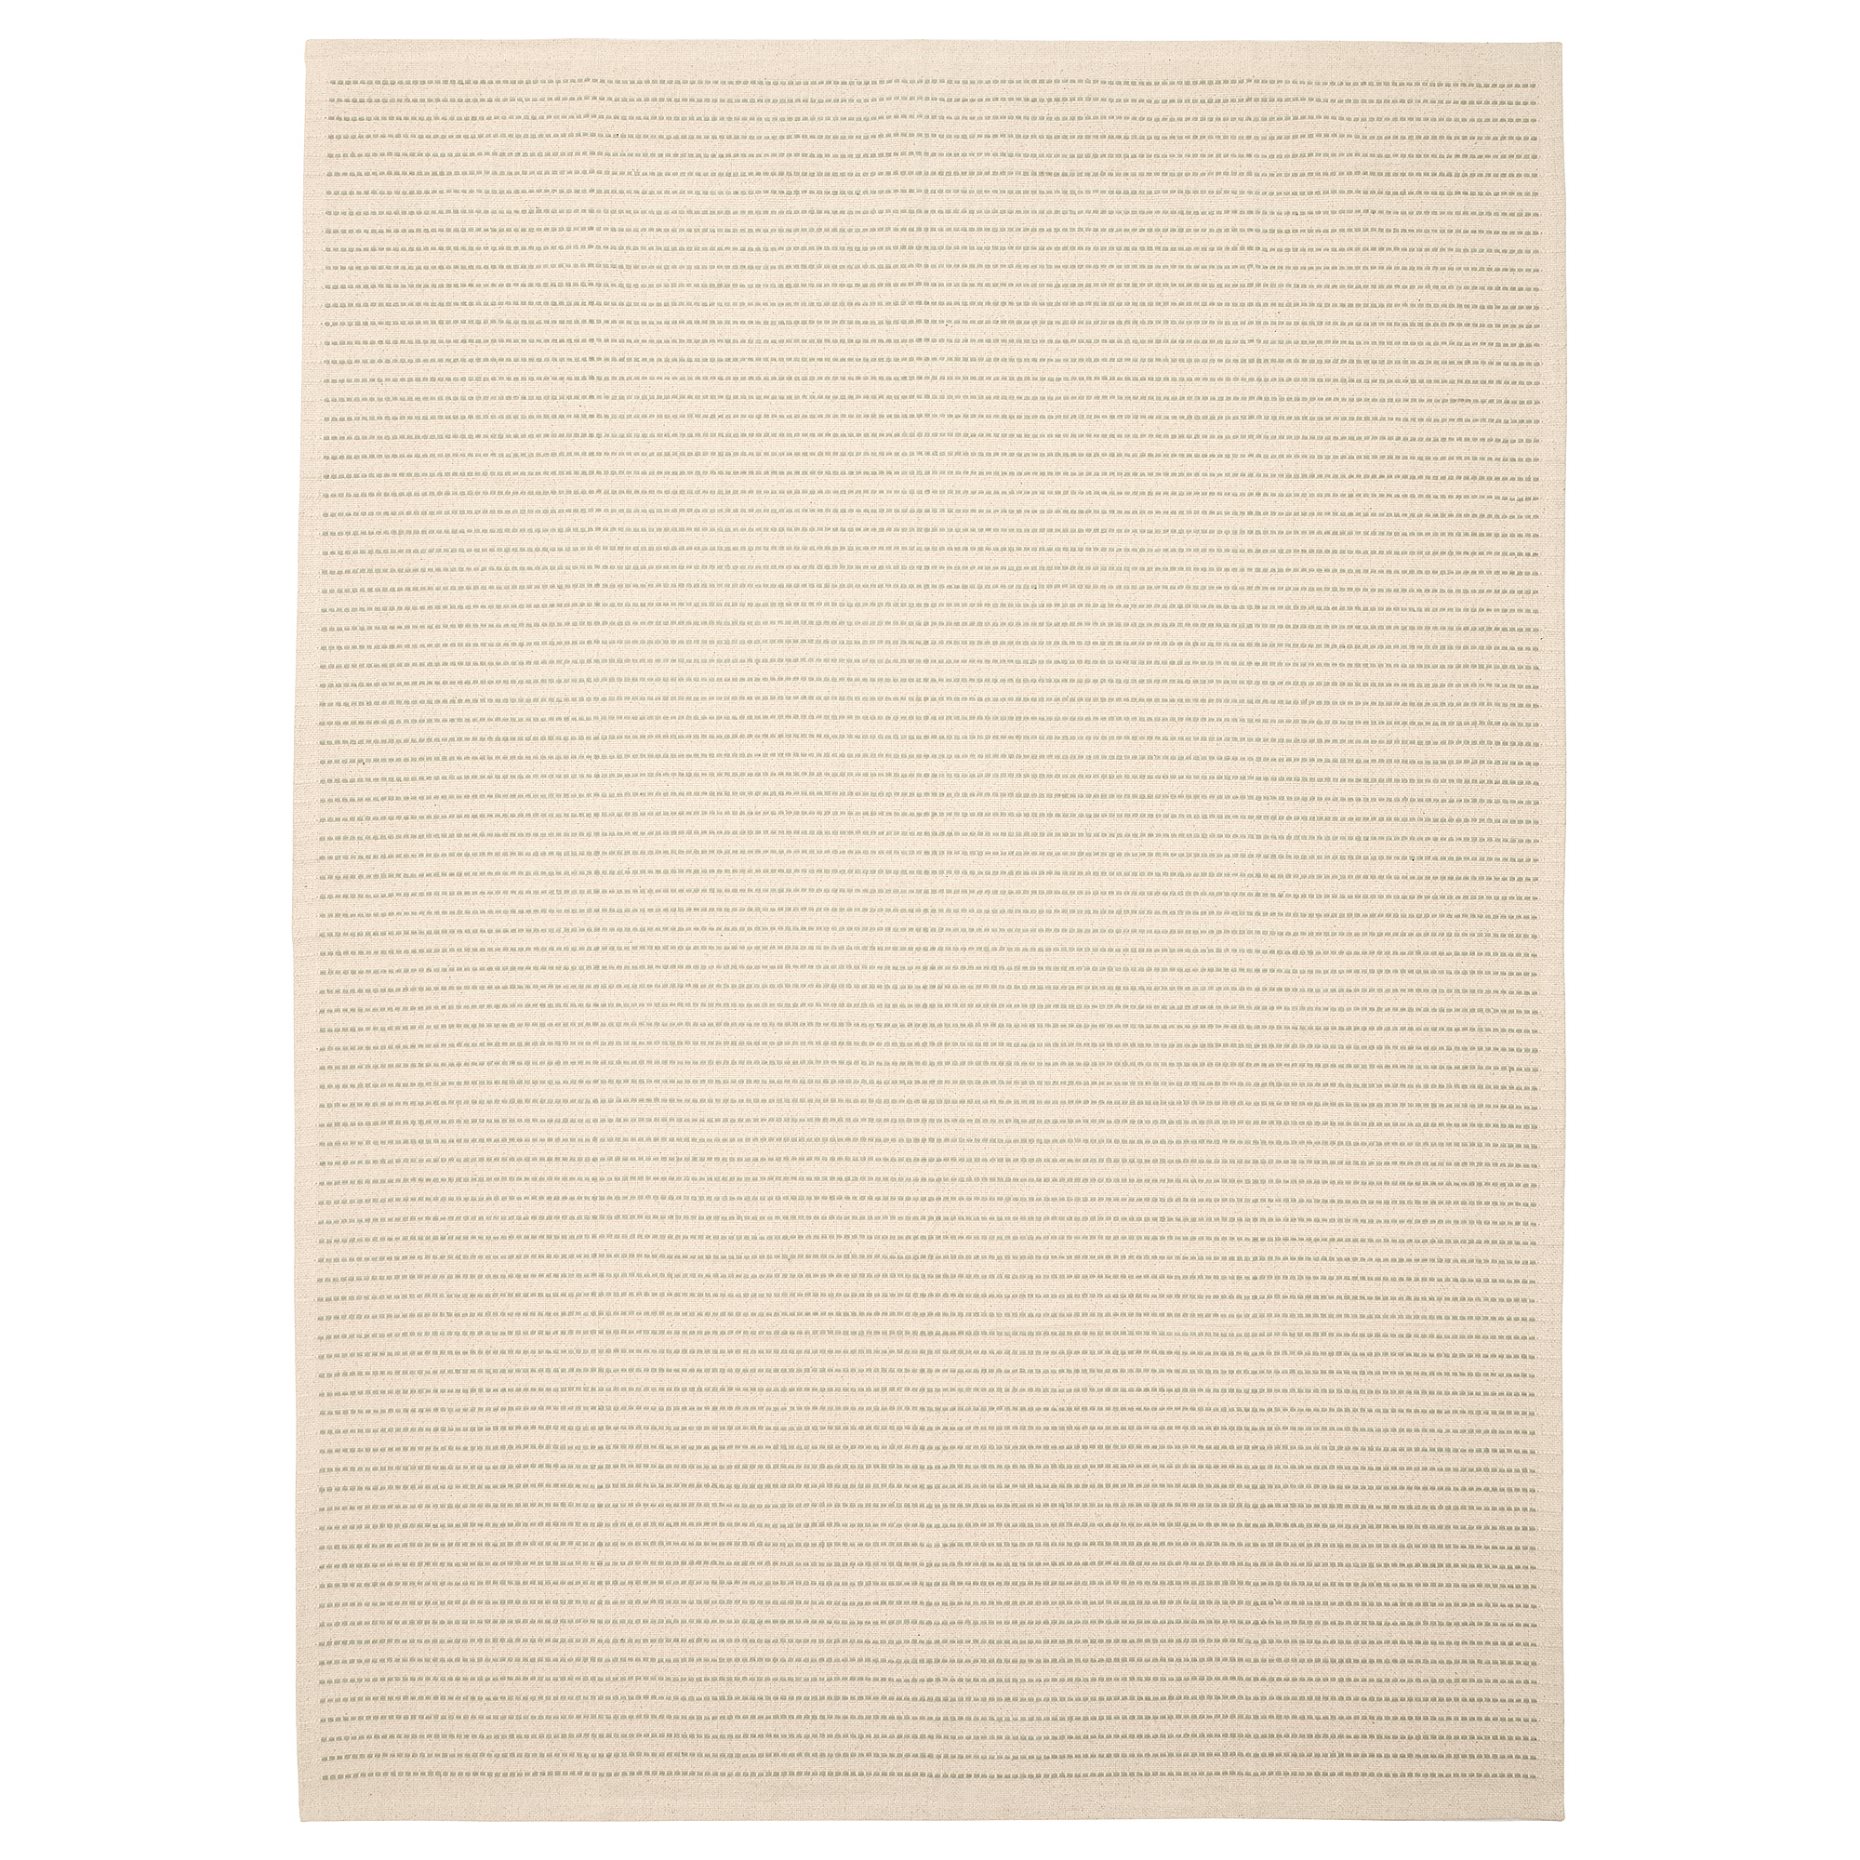 STARREKLINTE, χαλί χαμηλή πλέξη, 185x280 cm, 705.079.15